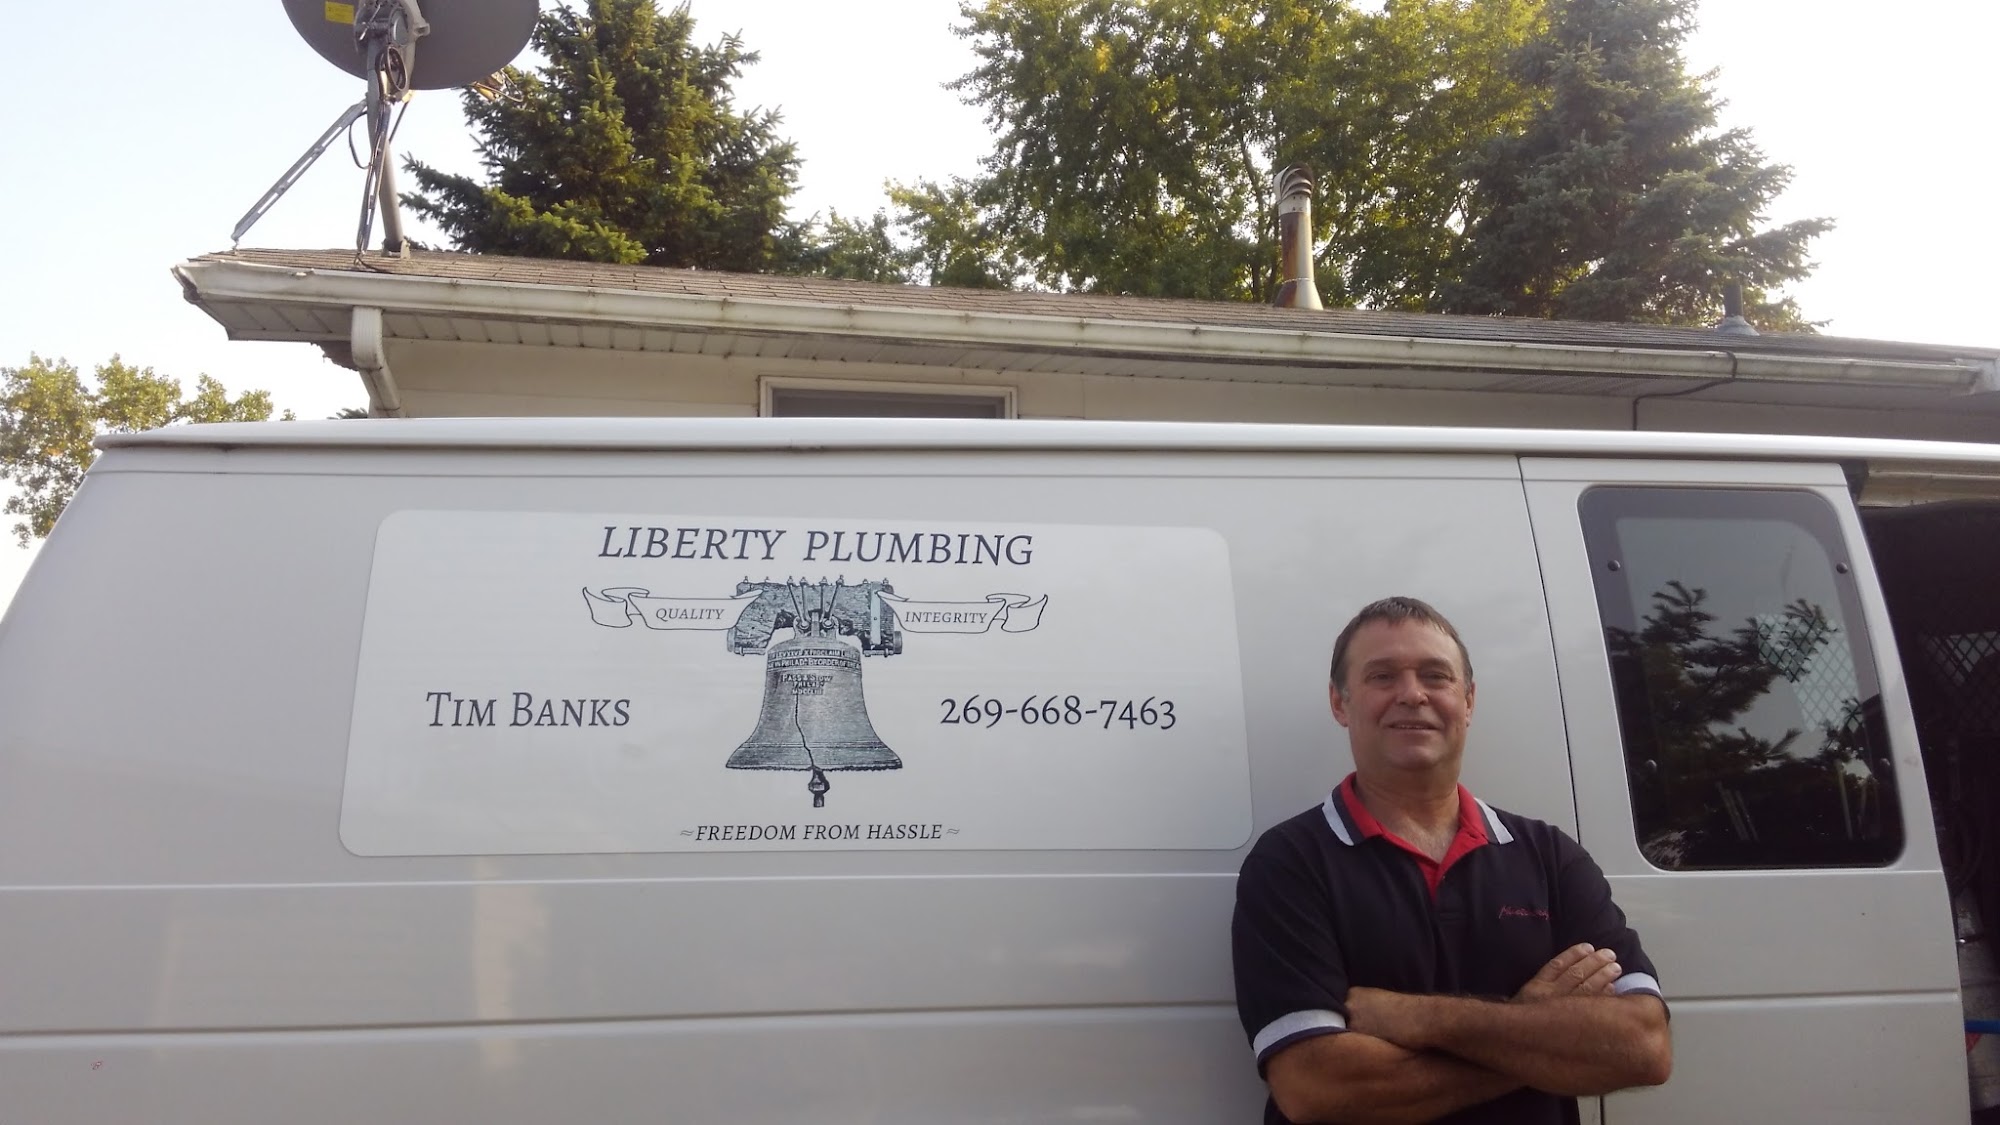 Liberty Plumbing 27848 Red Arrow Hwy, Mattawan Michigan 49071